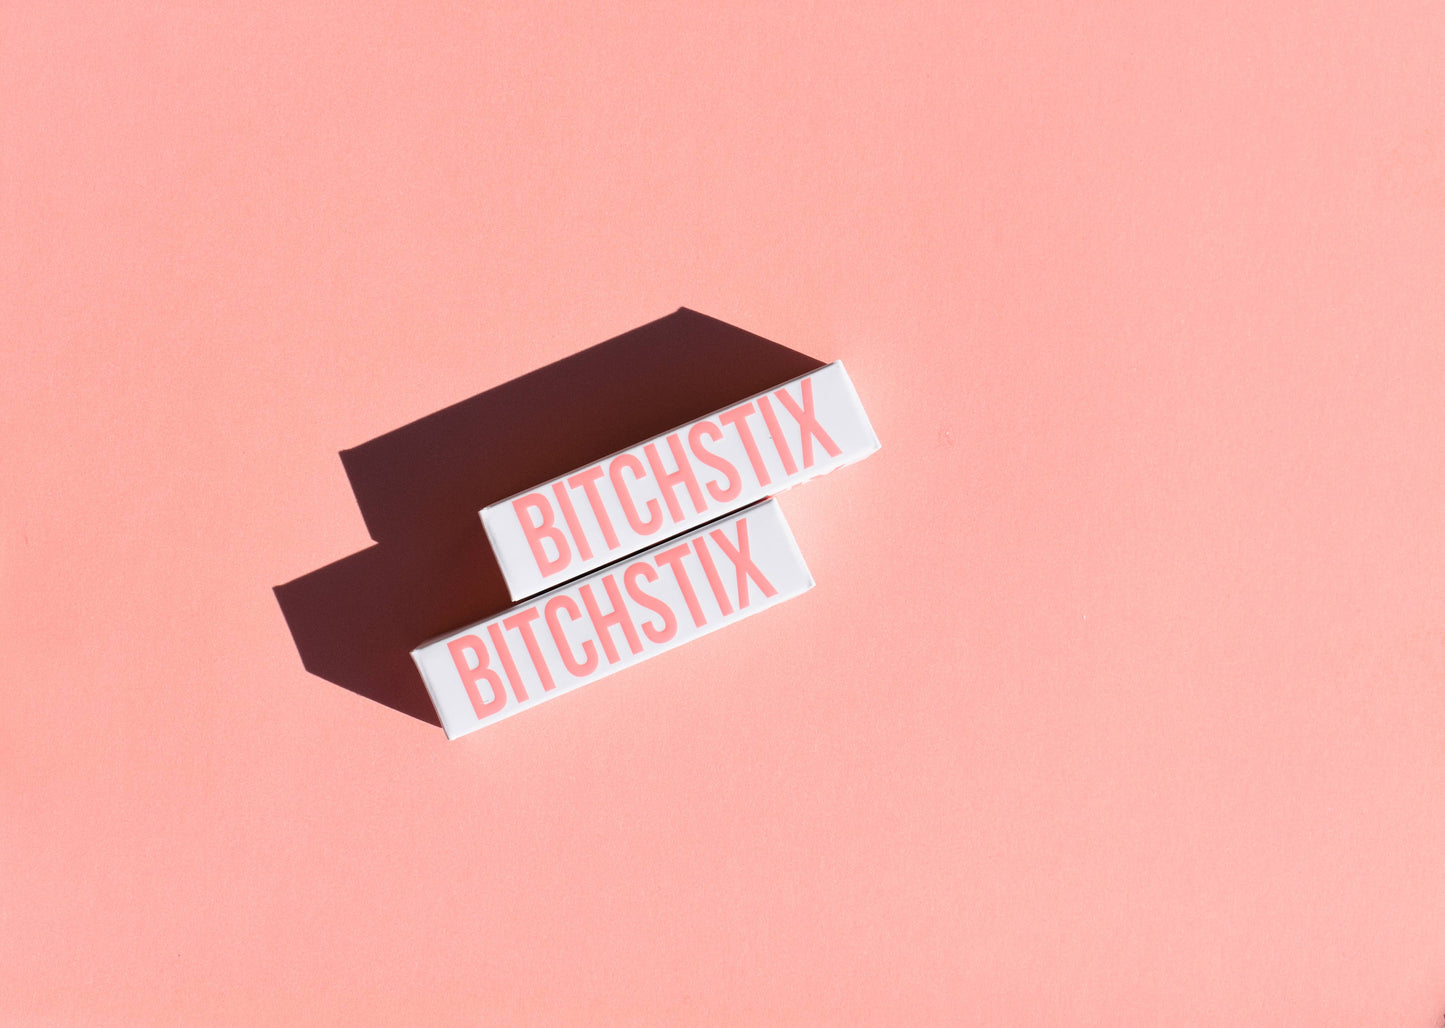 BITCHSTIX - Pink Lemon Organic Lip Balm